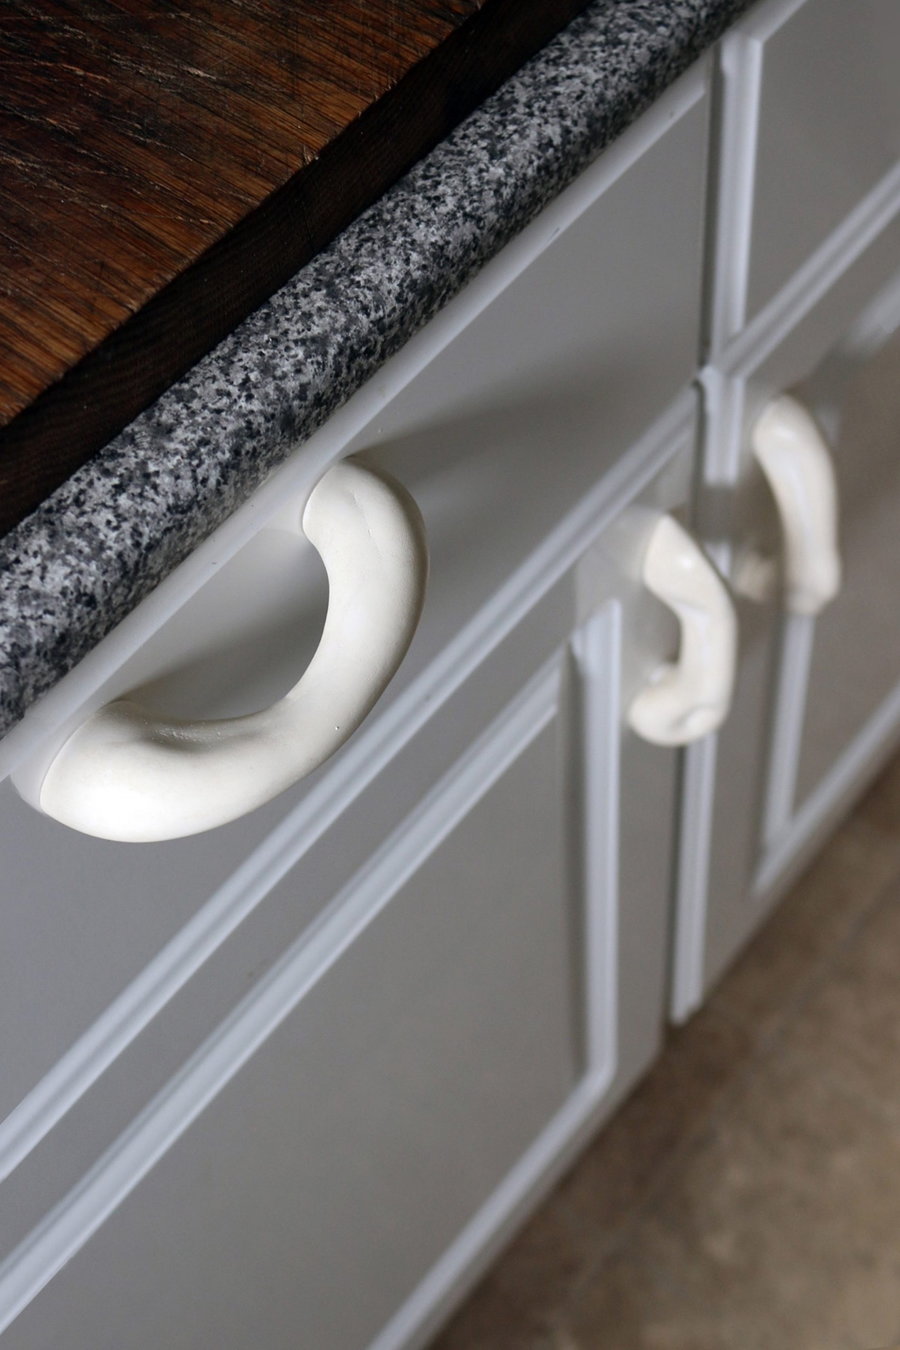 Kitchen drawer handles made from Tessa Silva's 